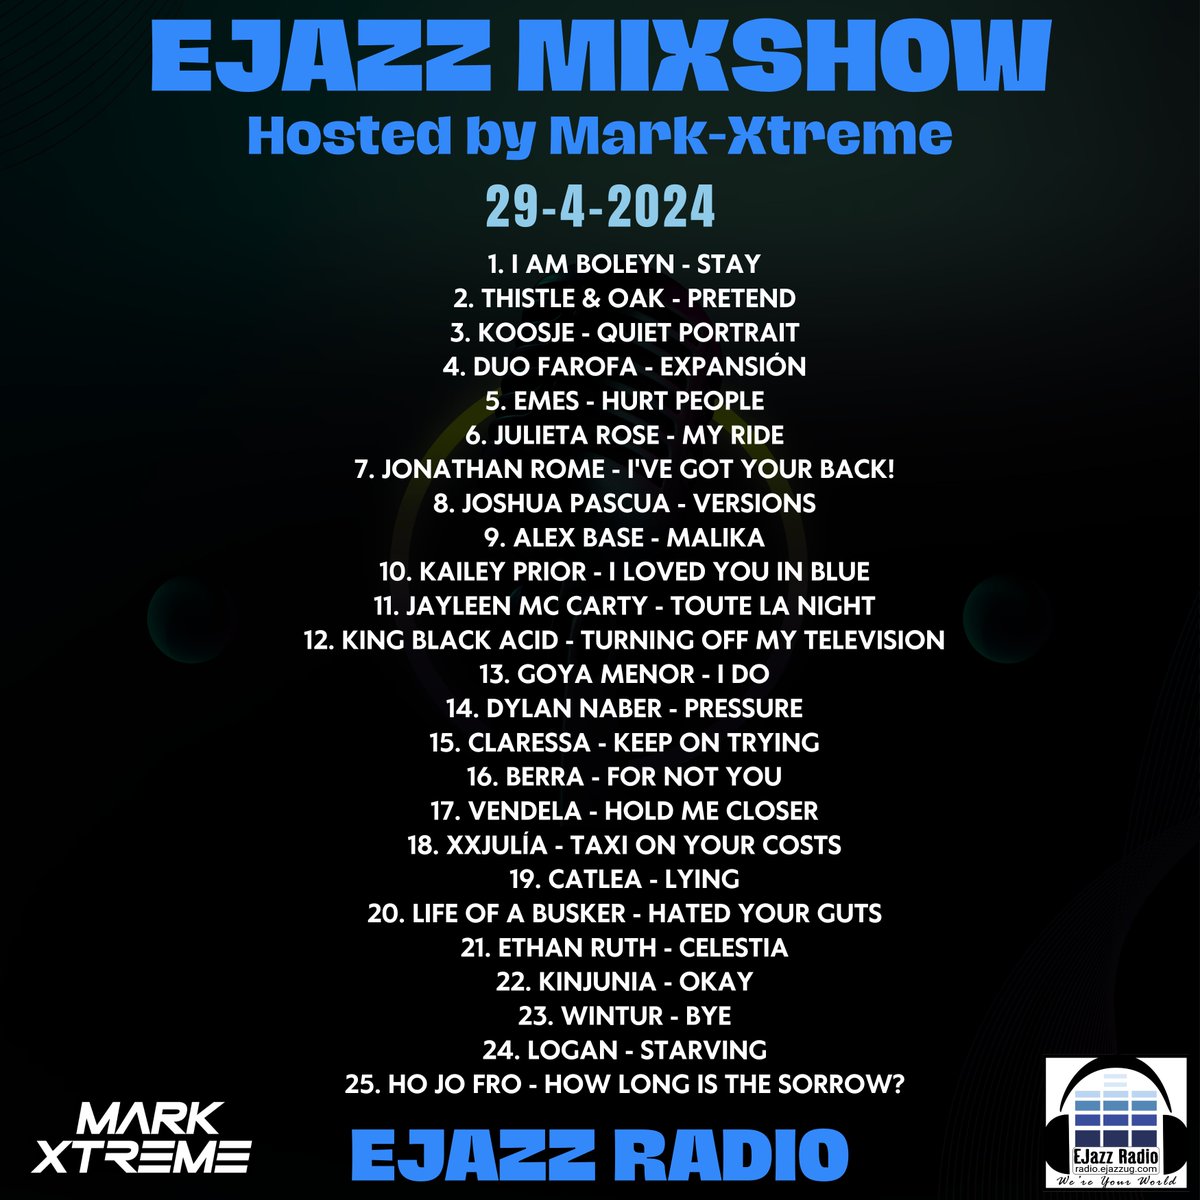 #EjazzMixShow Mon-Friday 1-2pm EAT on Ejazz Radio hosted by Dj Mark-Xtreme

29-4-2024 Playlist

#MixShow #Newmusic #goodmusic #Radio #Indieartists #indiemusic